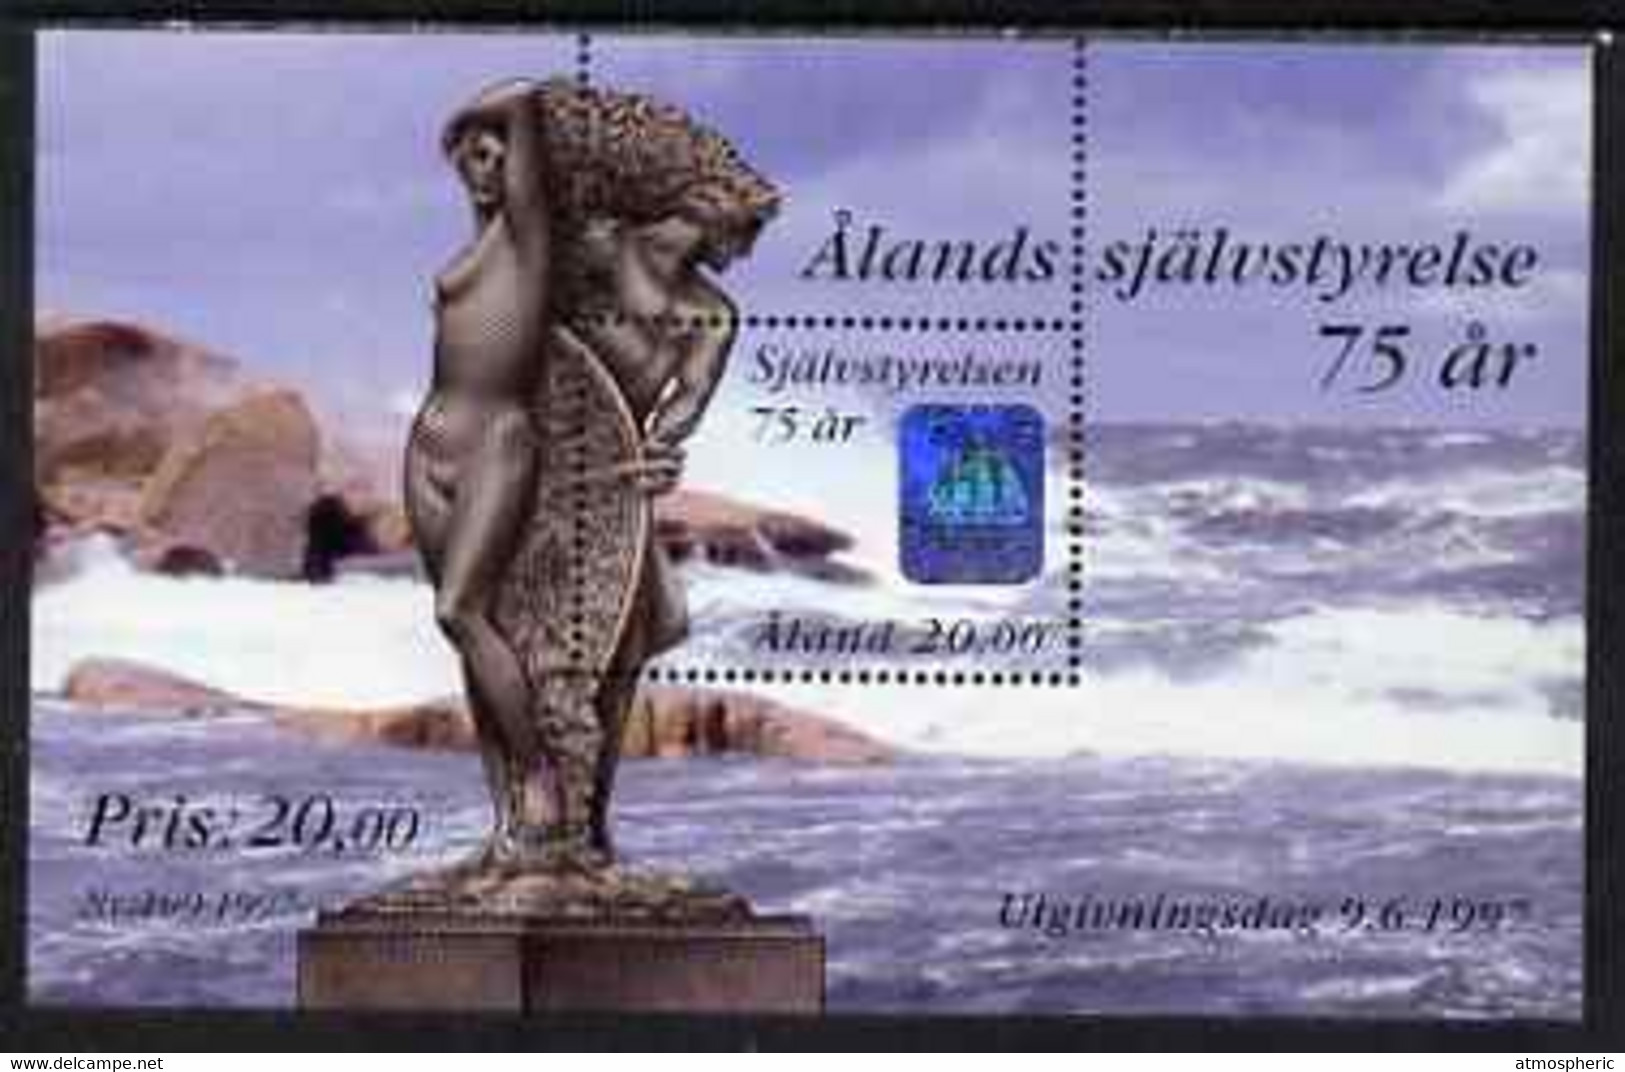 Aland Islands 1997 75th Anniversary Of Autonomy Perf M/sheet U/M SG MS 126 - Emisiones Locales